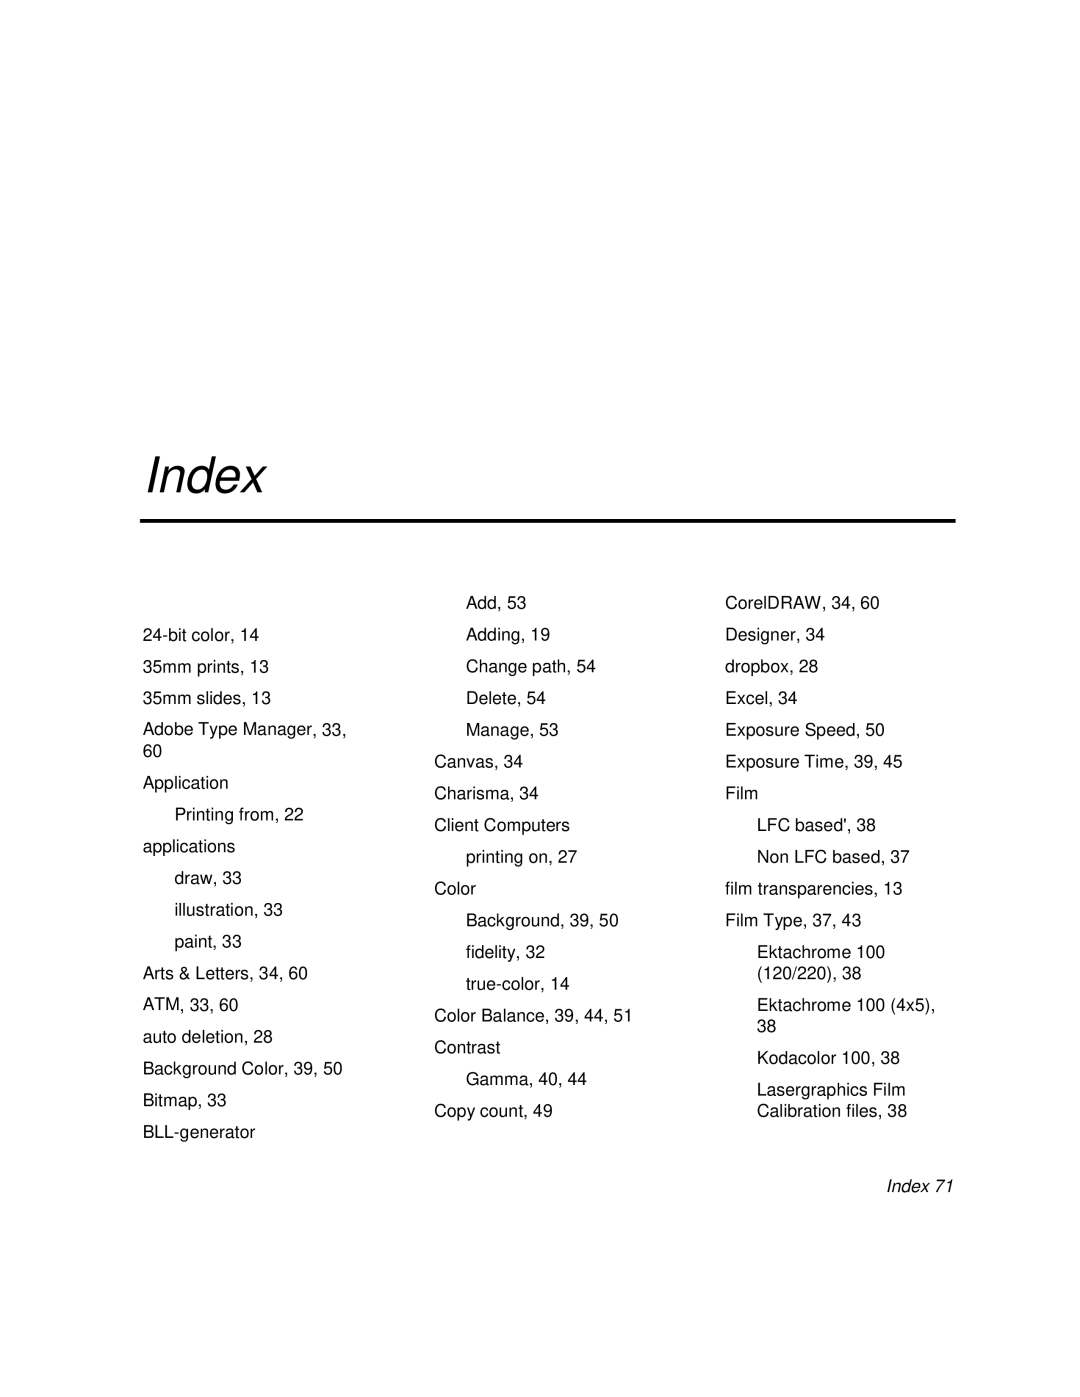 Polaroid BLL Generator manual Index 